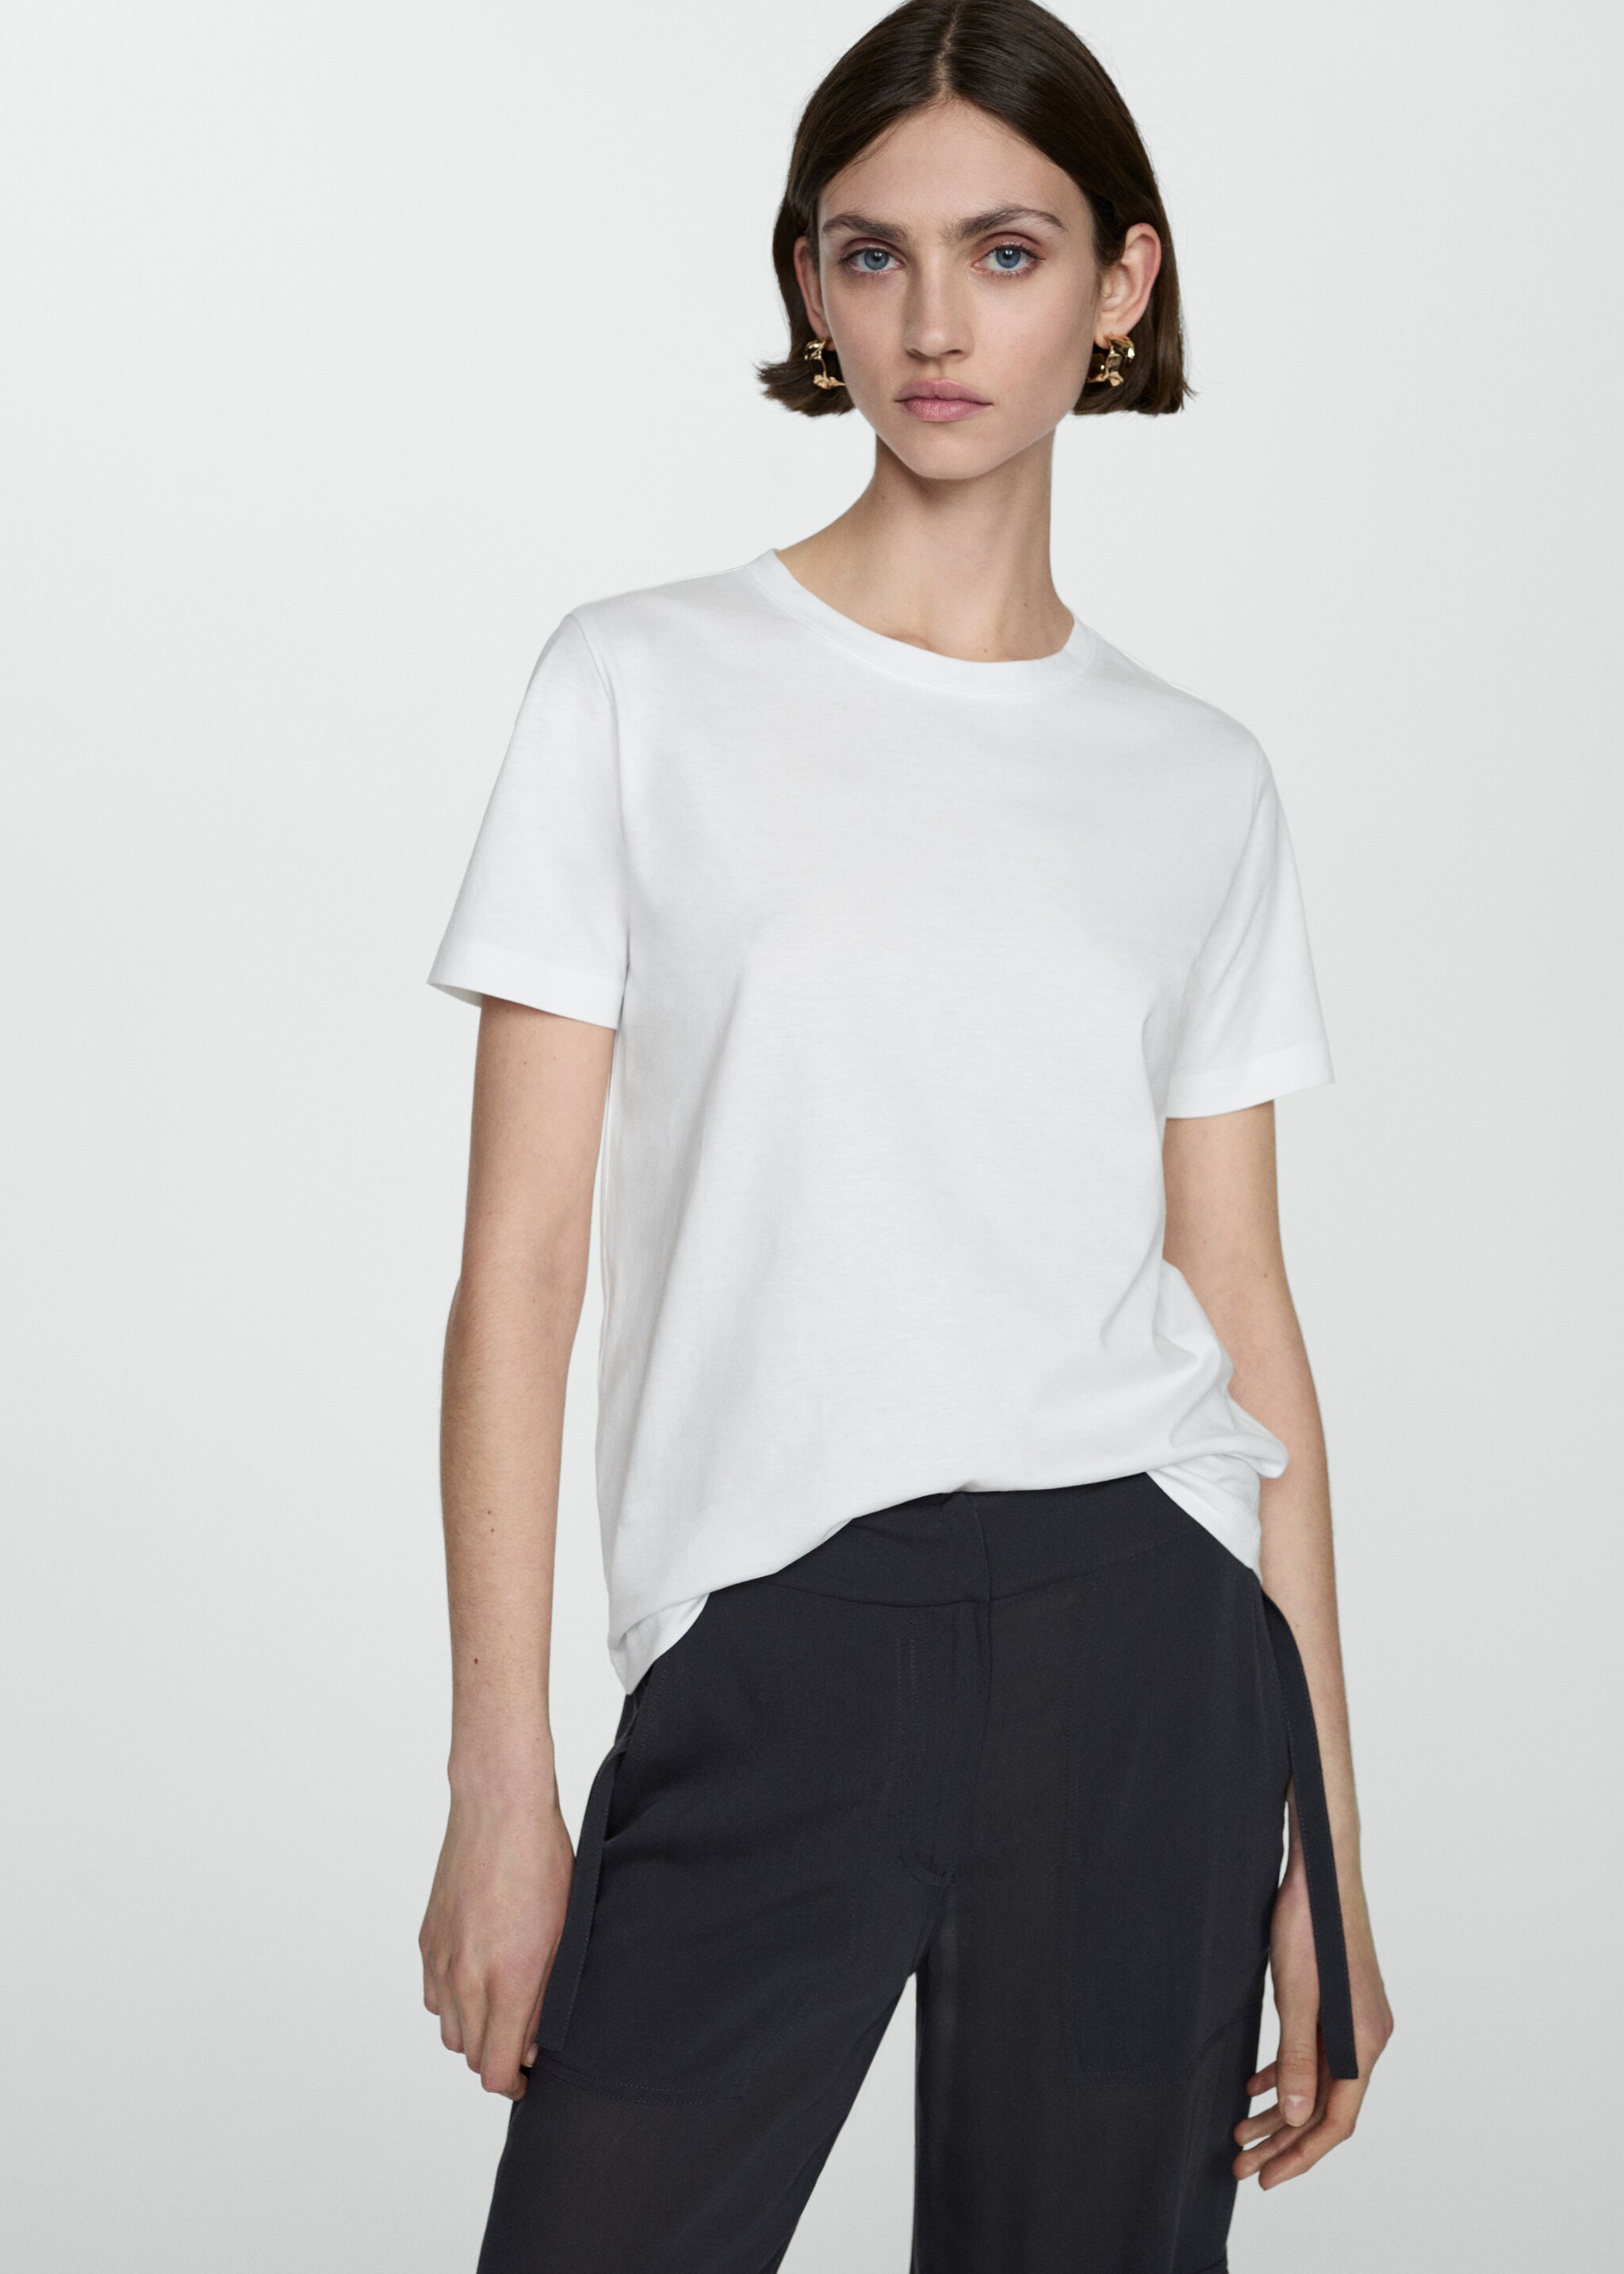 Camiseta algodón manga corta - Plano medio